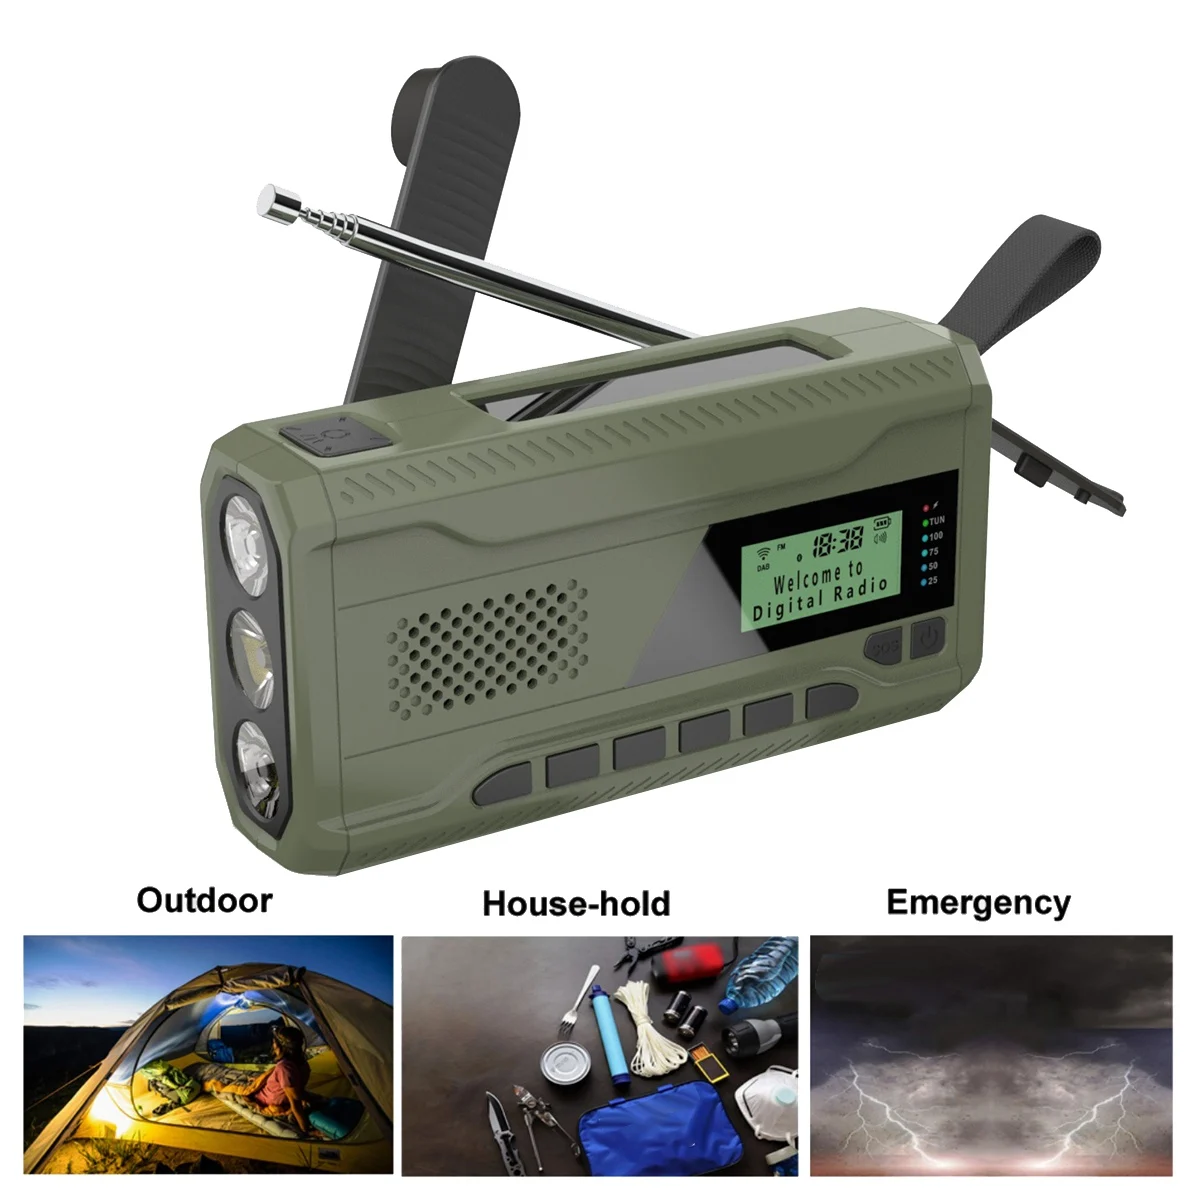 

DAB/FM Bluetooth Radio Emergency Radio Built in 4500Mah Battery Portable Solar Hand Crank Radio Receiver Outdoor Radio